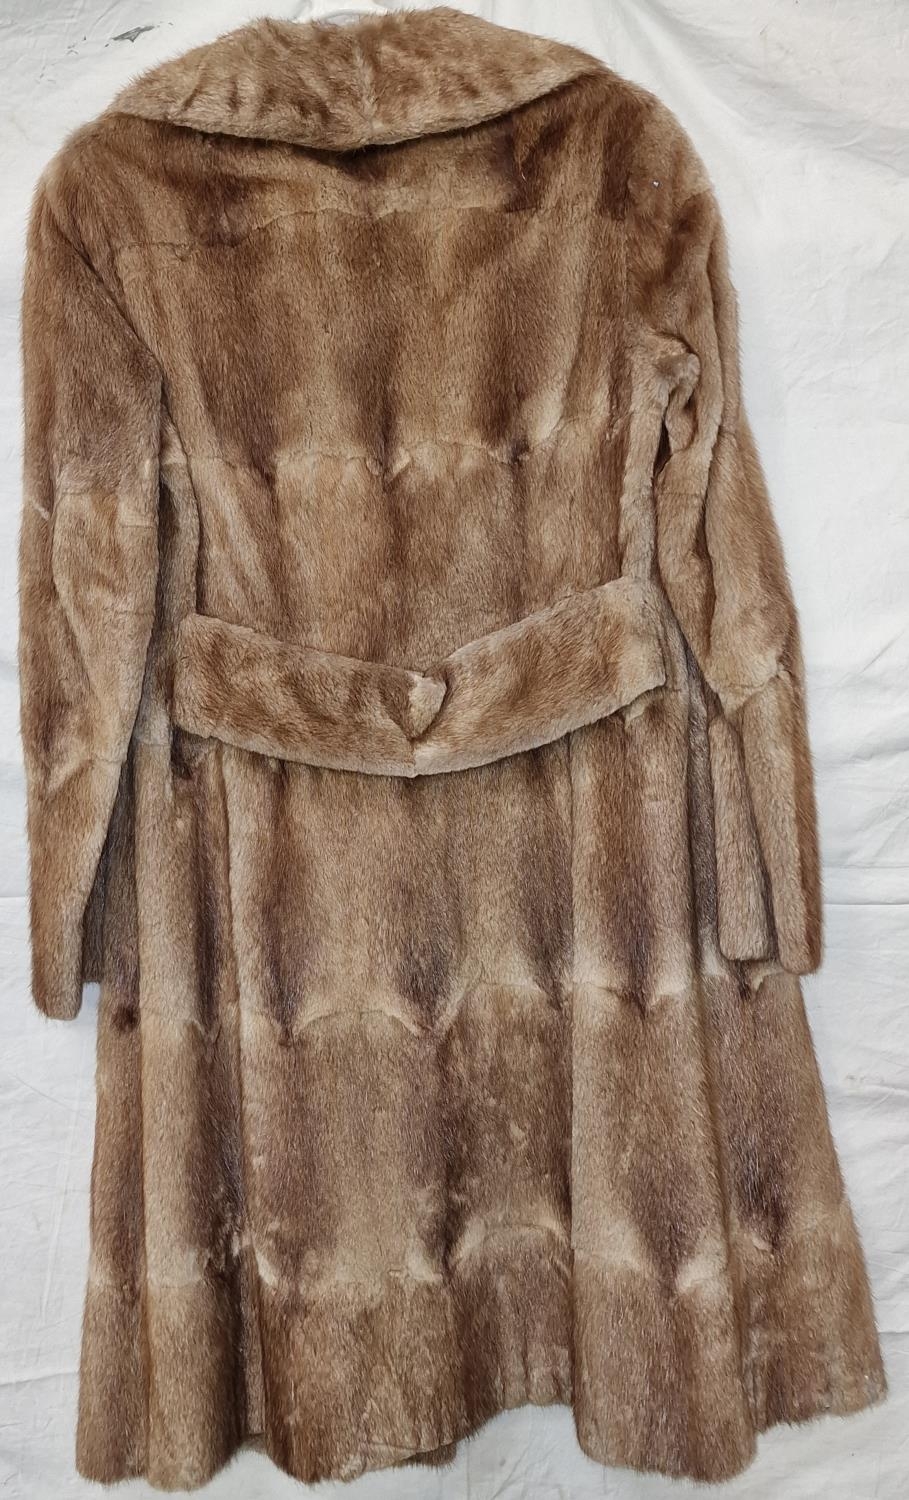 Vintage ladies South African rabbit fur coat by "Union Fur Co. Johannesburg" no size label. - Image 3 of 3